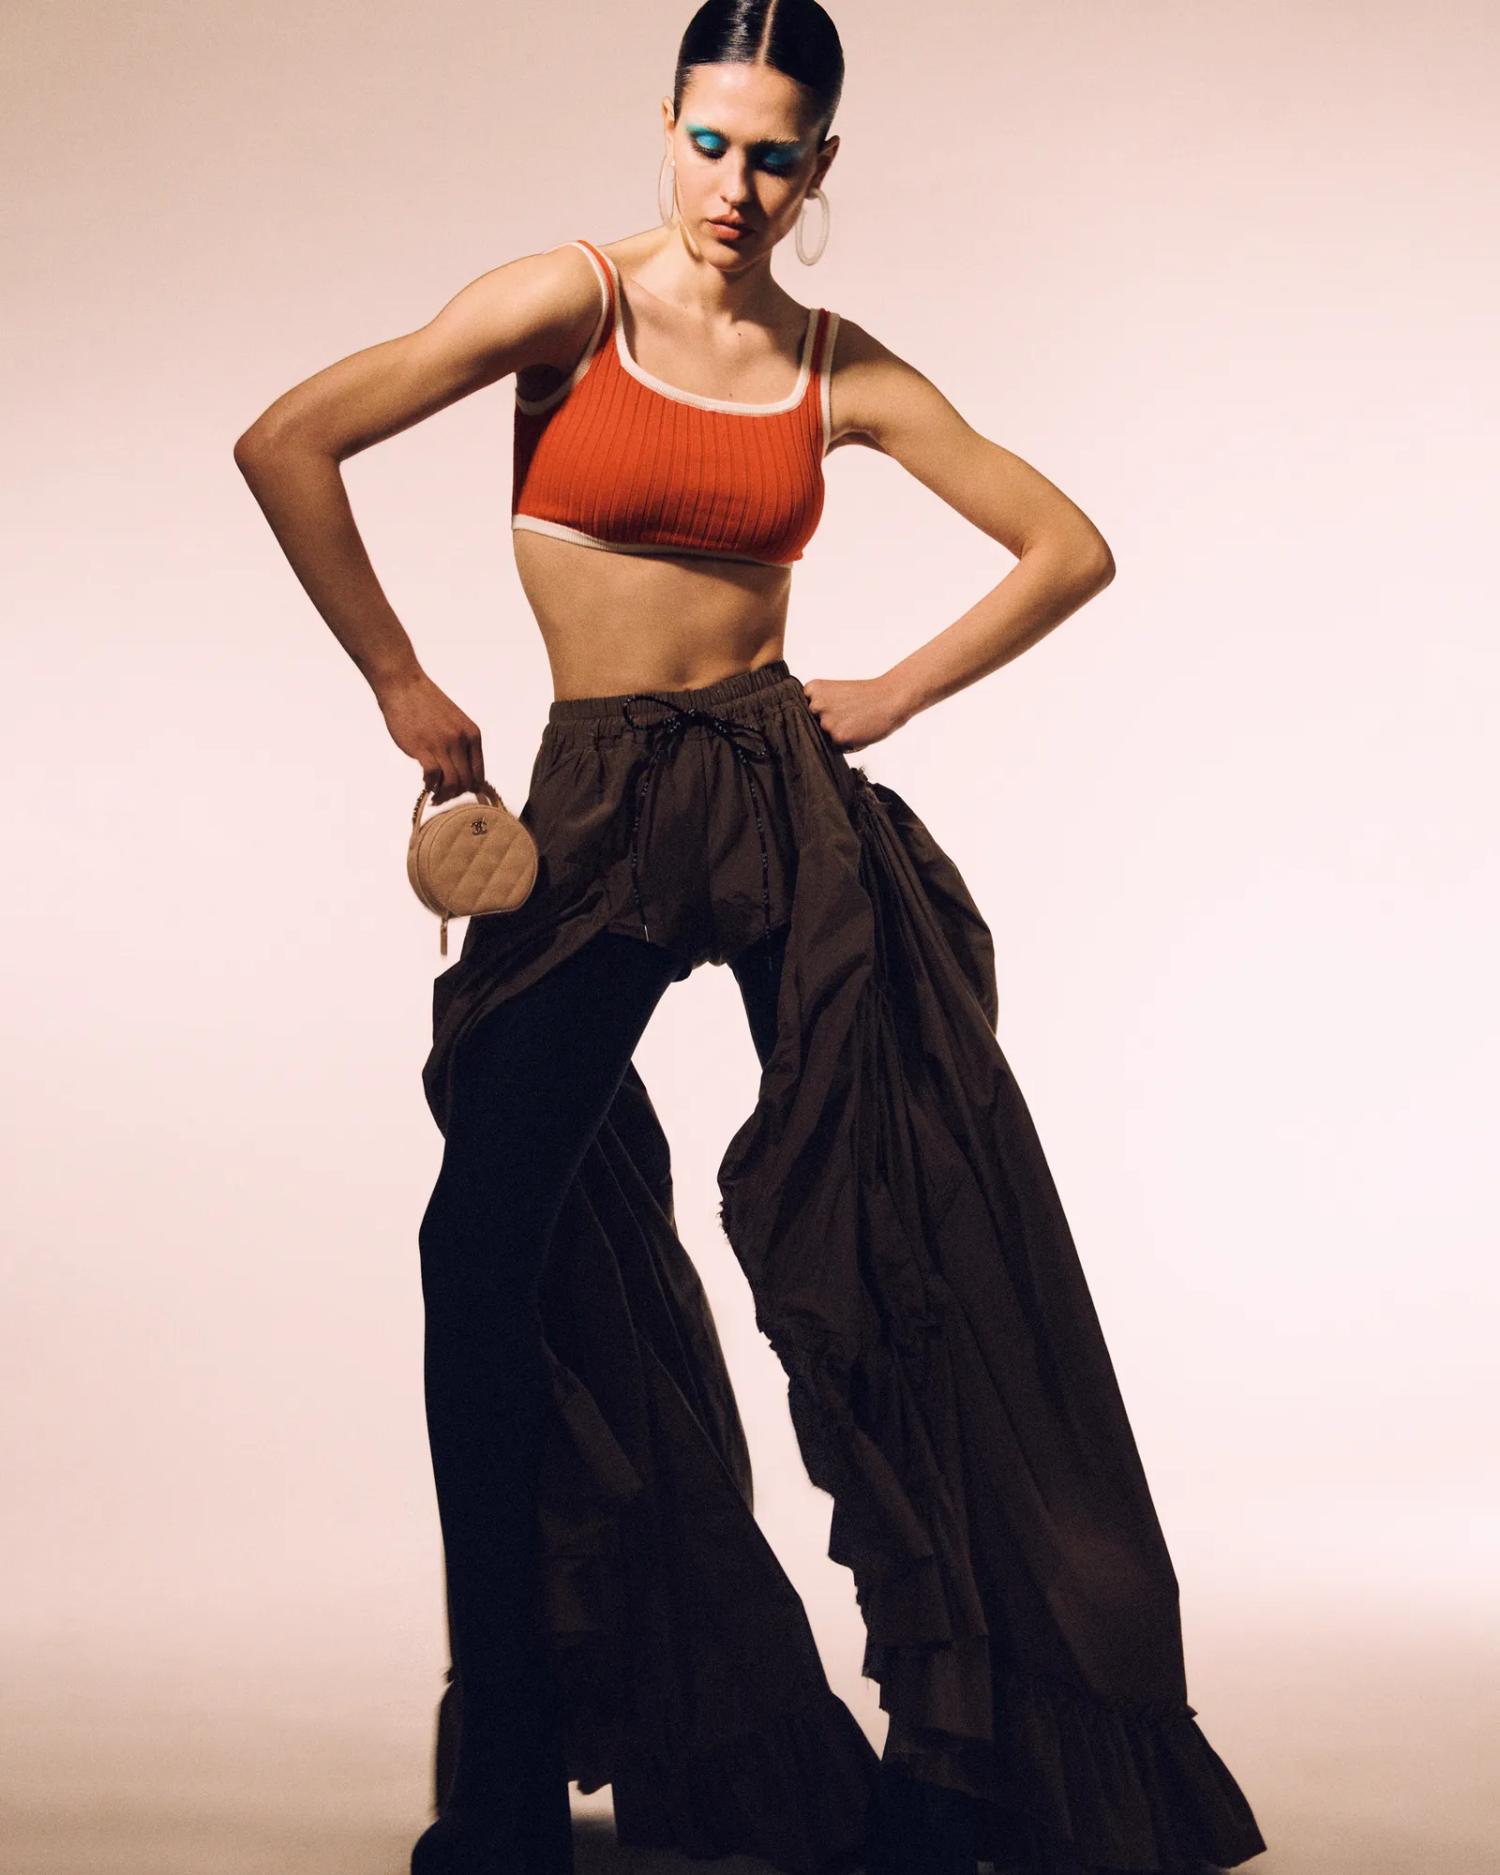 Amelia Gray Hamlin in Vivienne Westwood by Heji Shin for Vogue Japan April 2023 Fashion Editorials